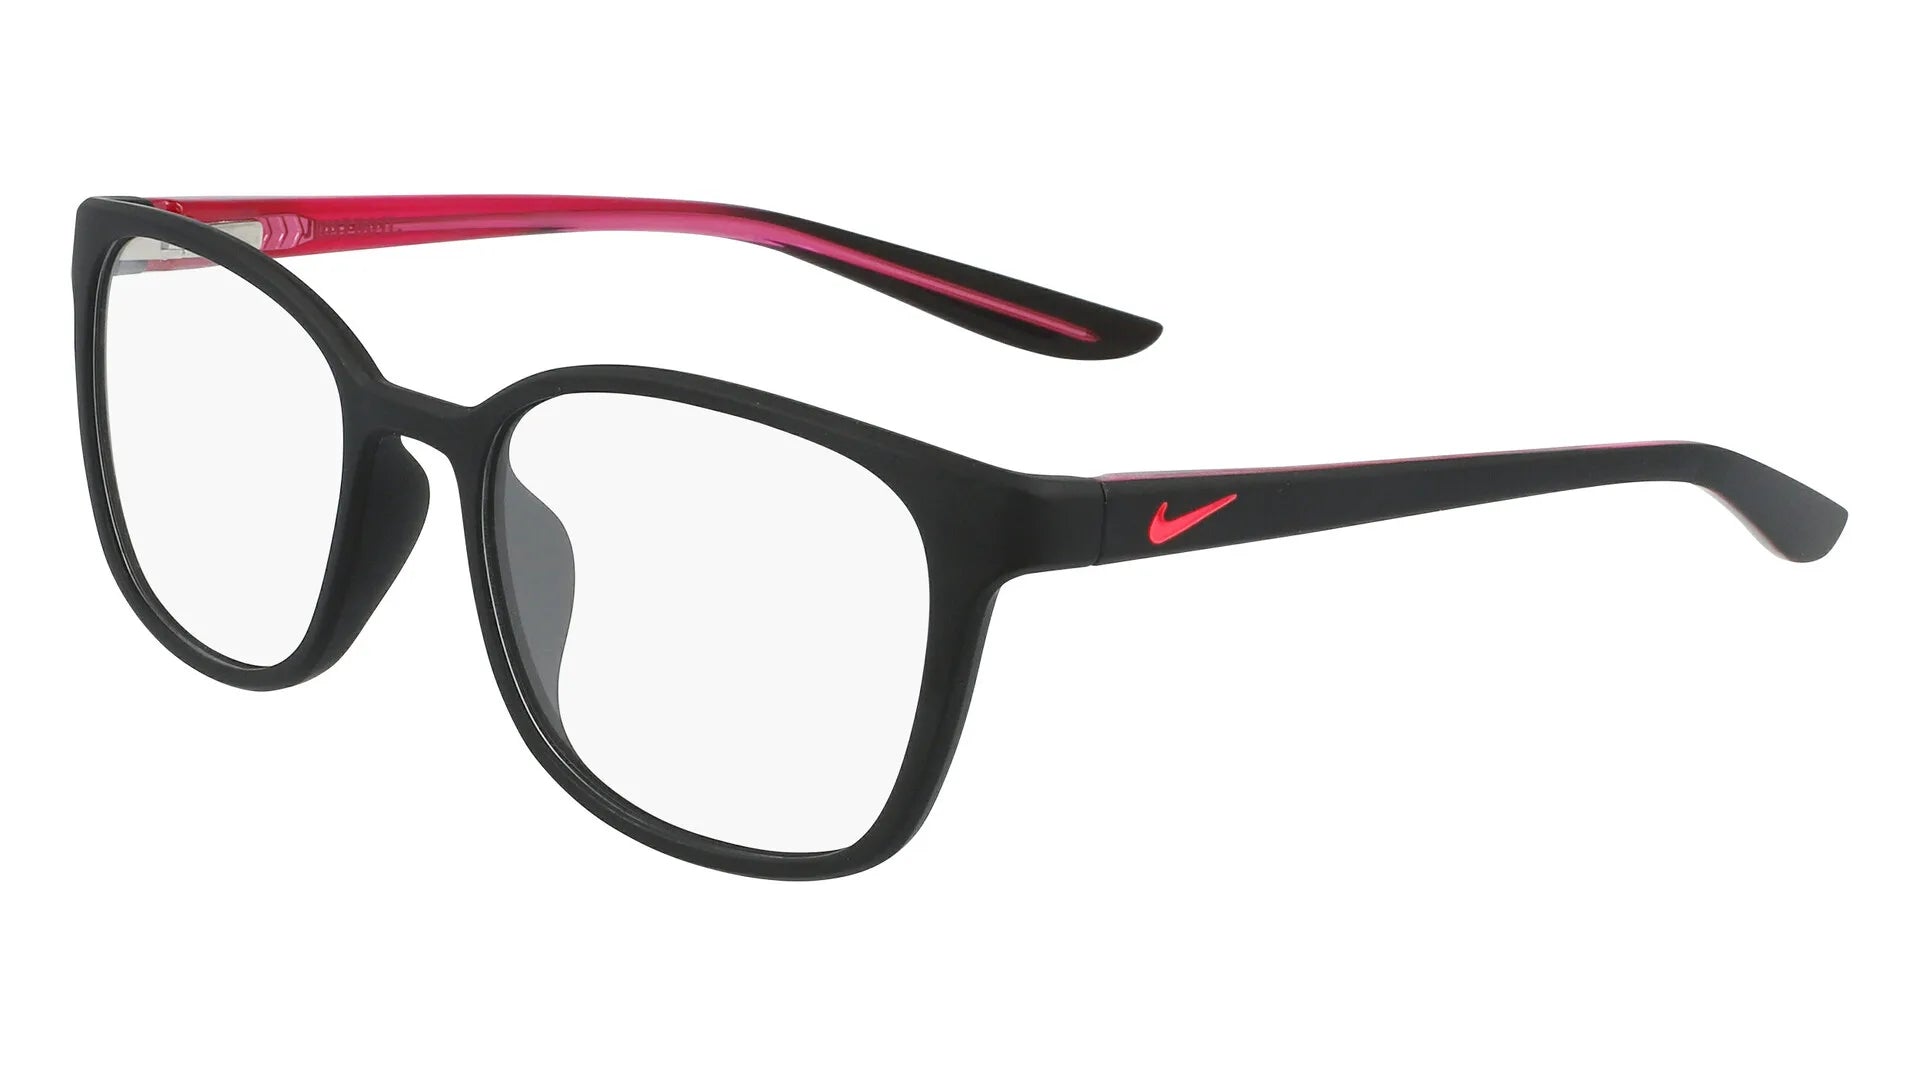 Nike 5027 Eyeglasses Matte Black / Hyper Pink